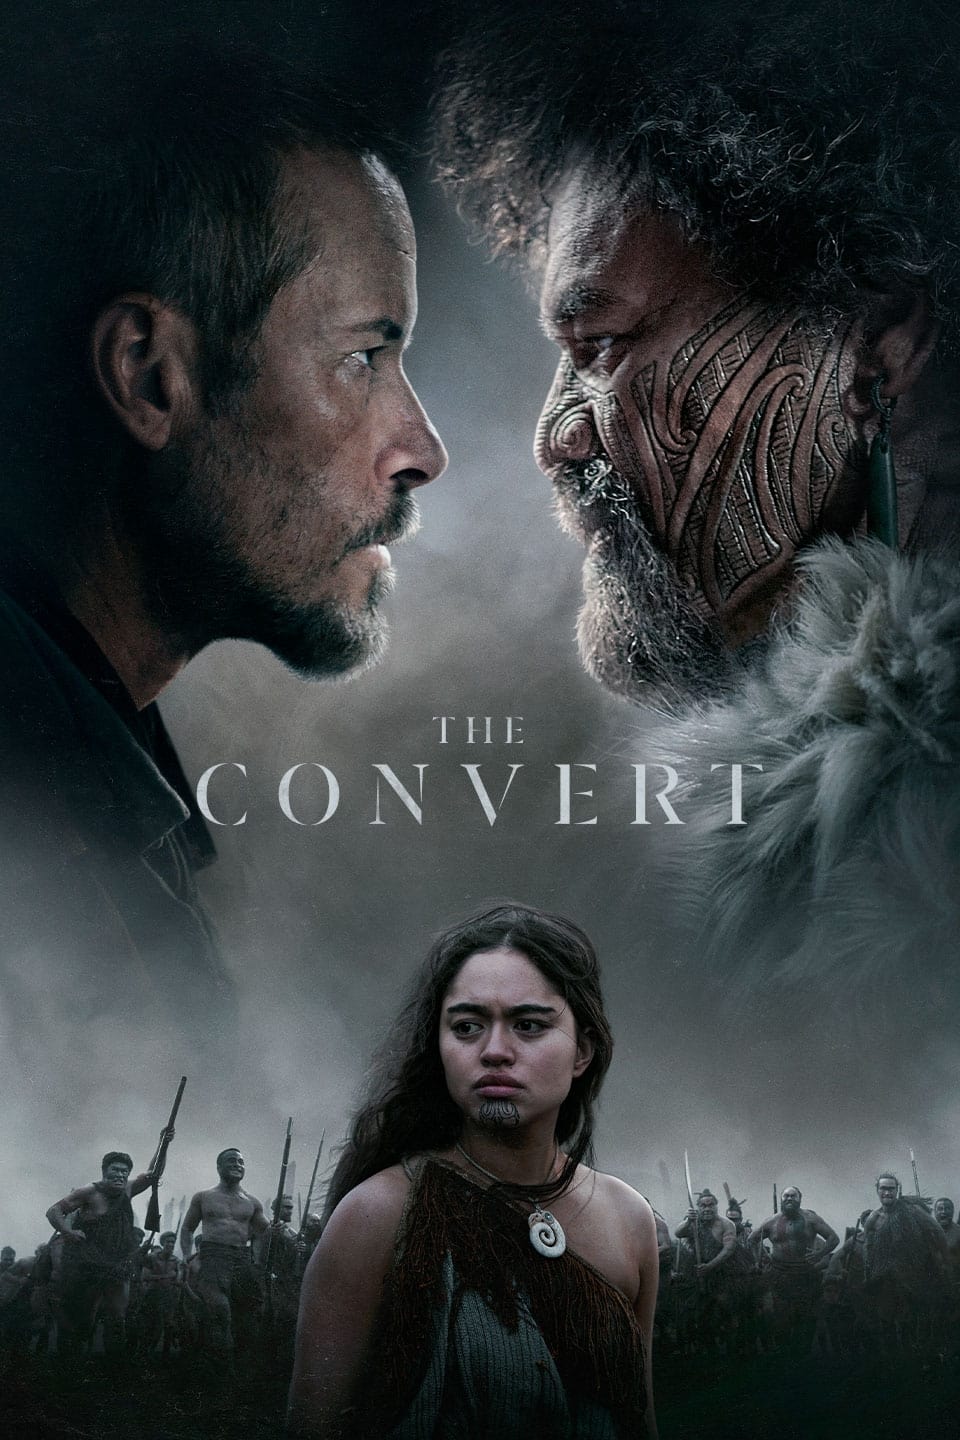 Plakát pro film “The Convert”